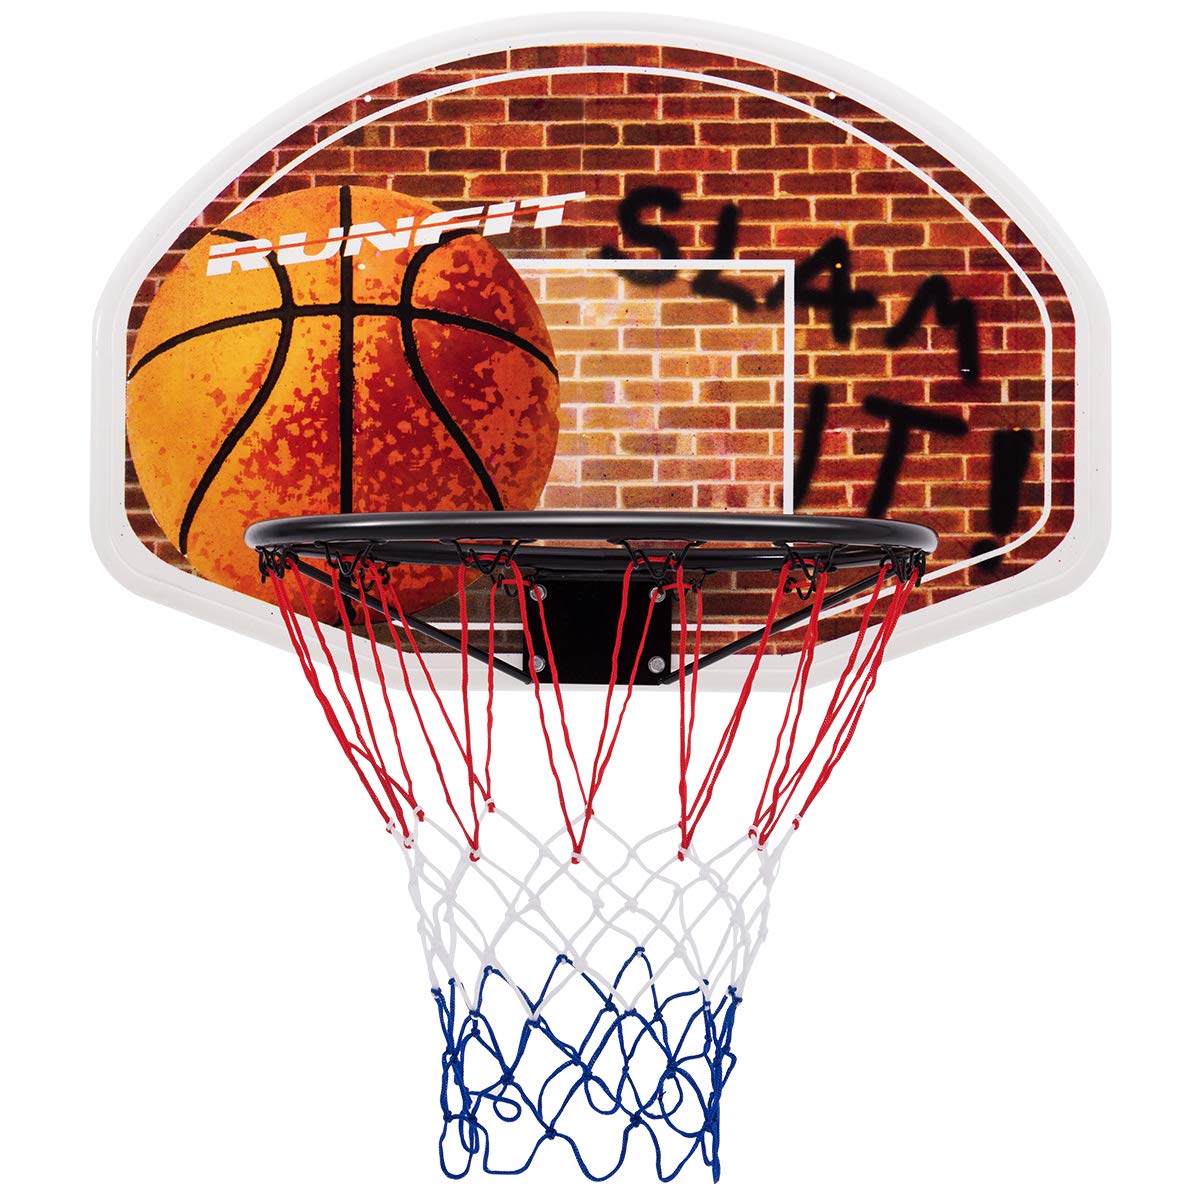 Giantex Basketball Hoop for Door, 29 X 20 Inch Hanging Basketball Board Family Games